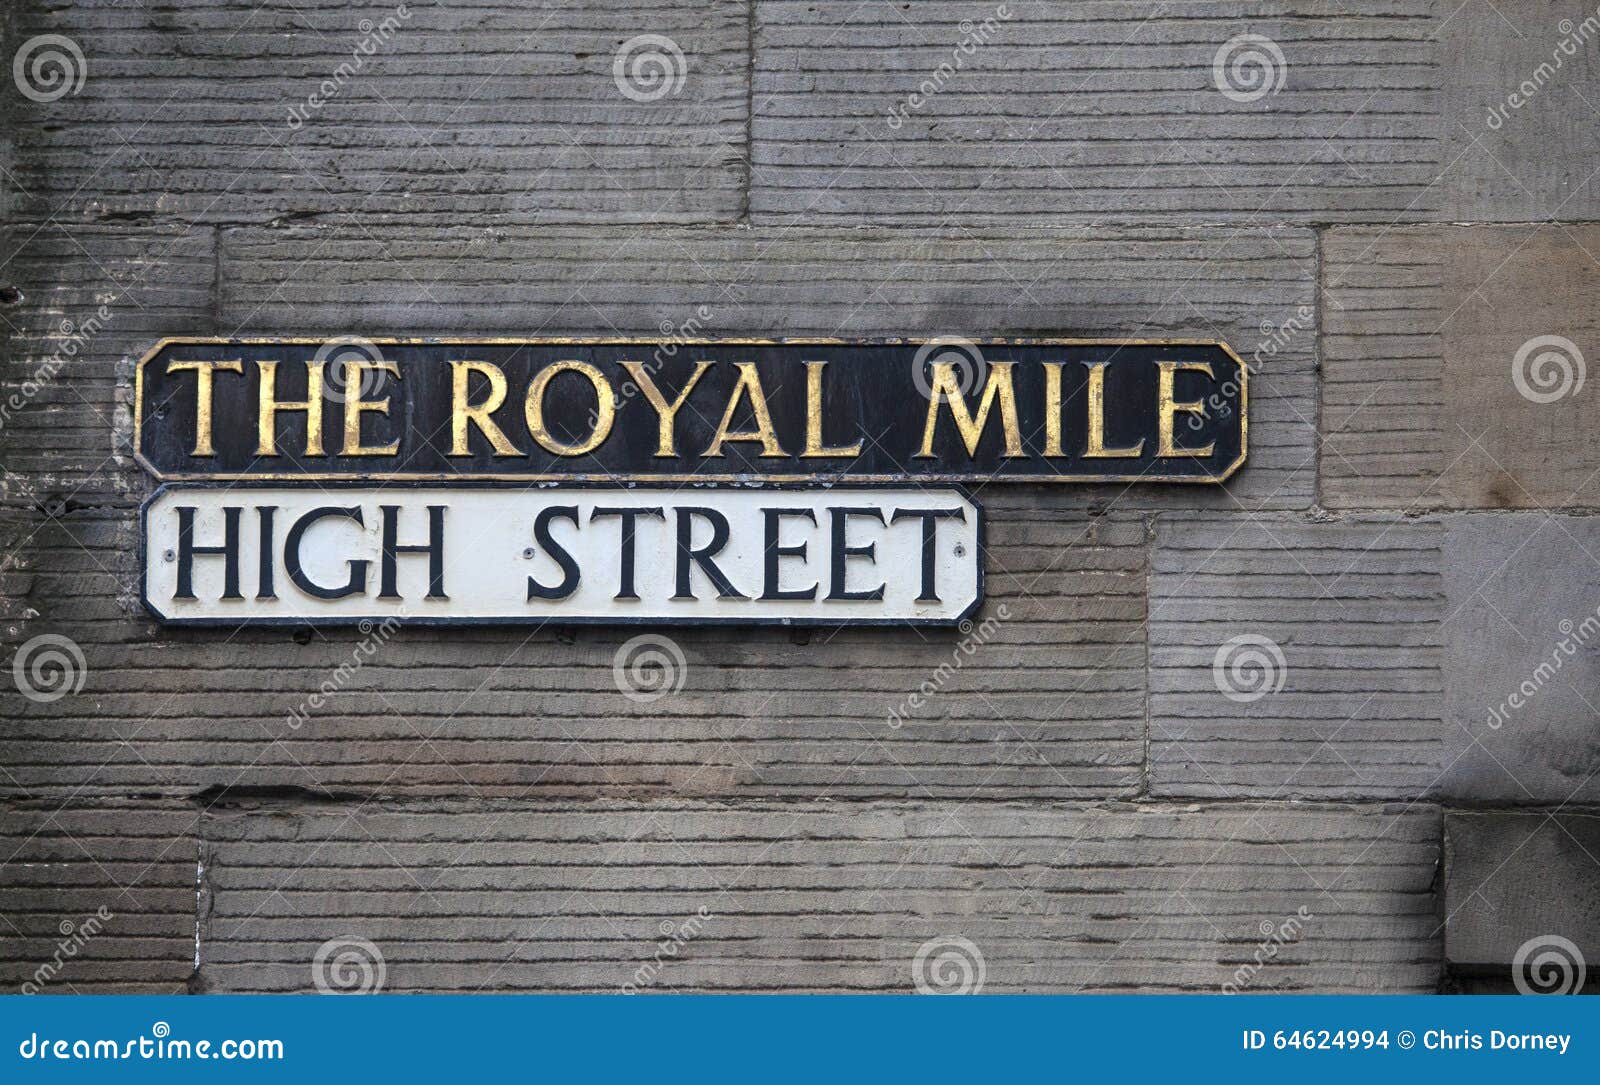 the royal mile in edinburgh